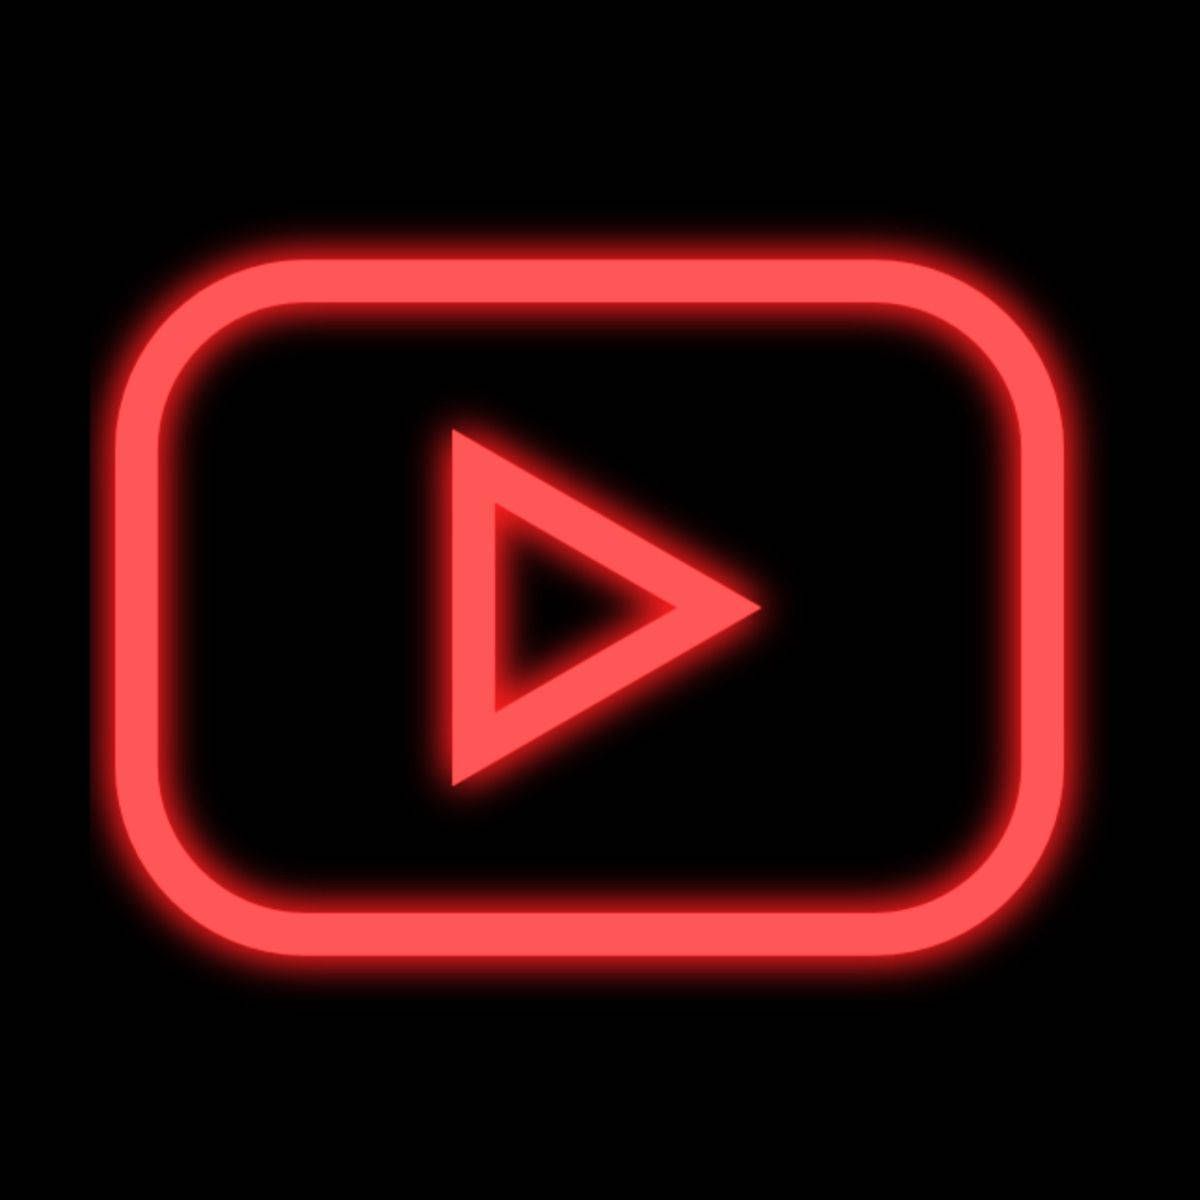 A neon youtube icon on black background - YouTube